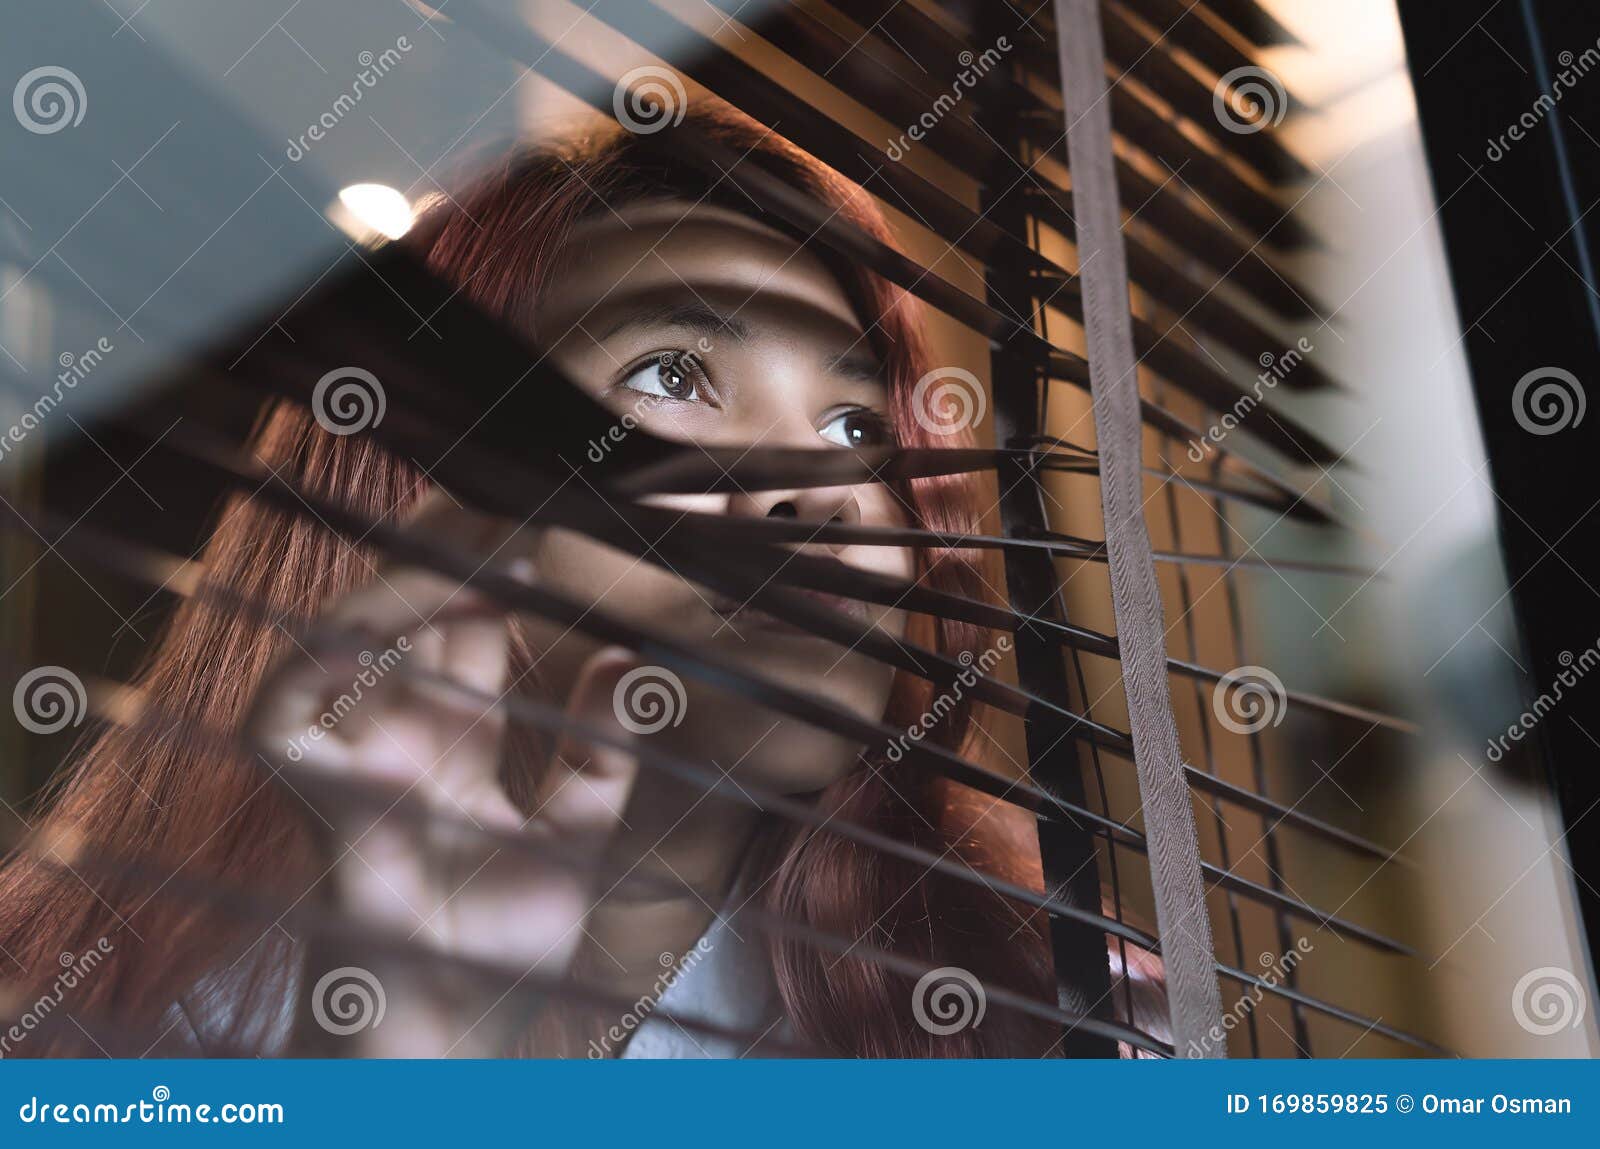 197 Peeping Blinds Stock Photos image